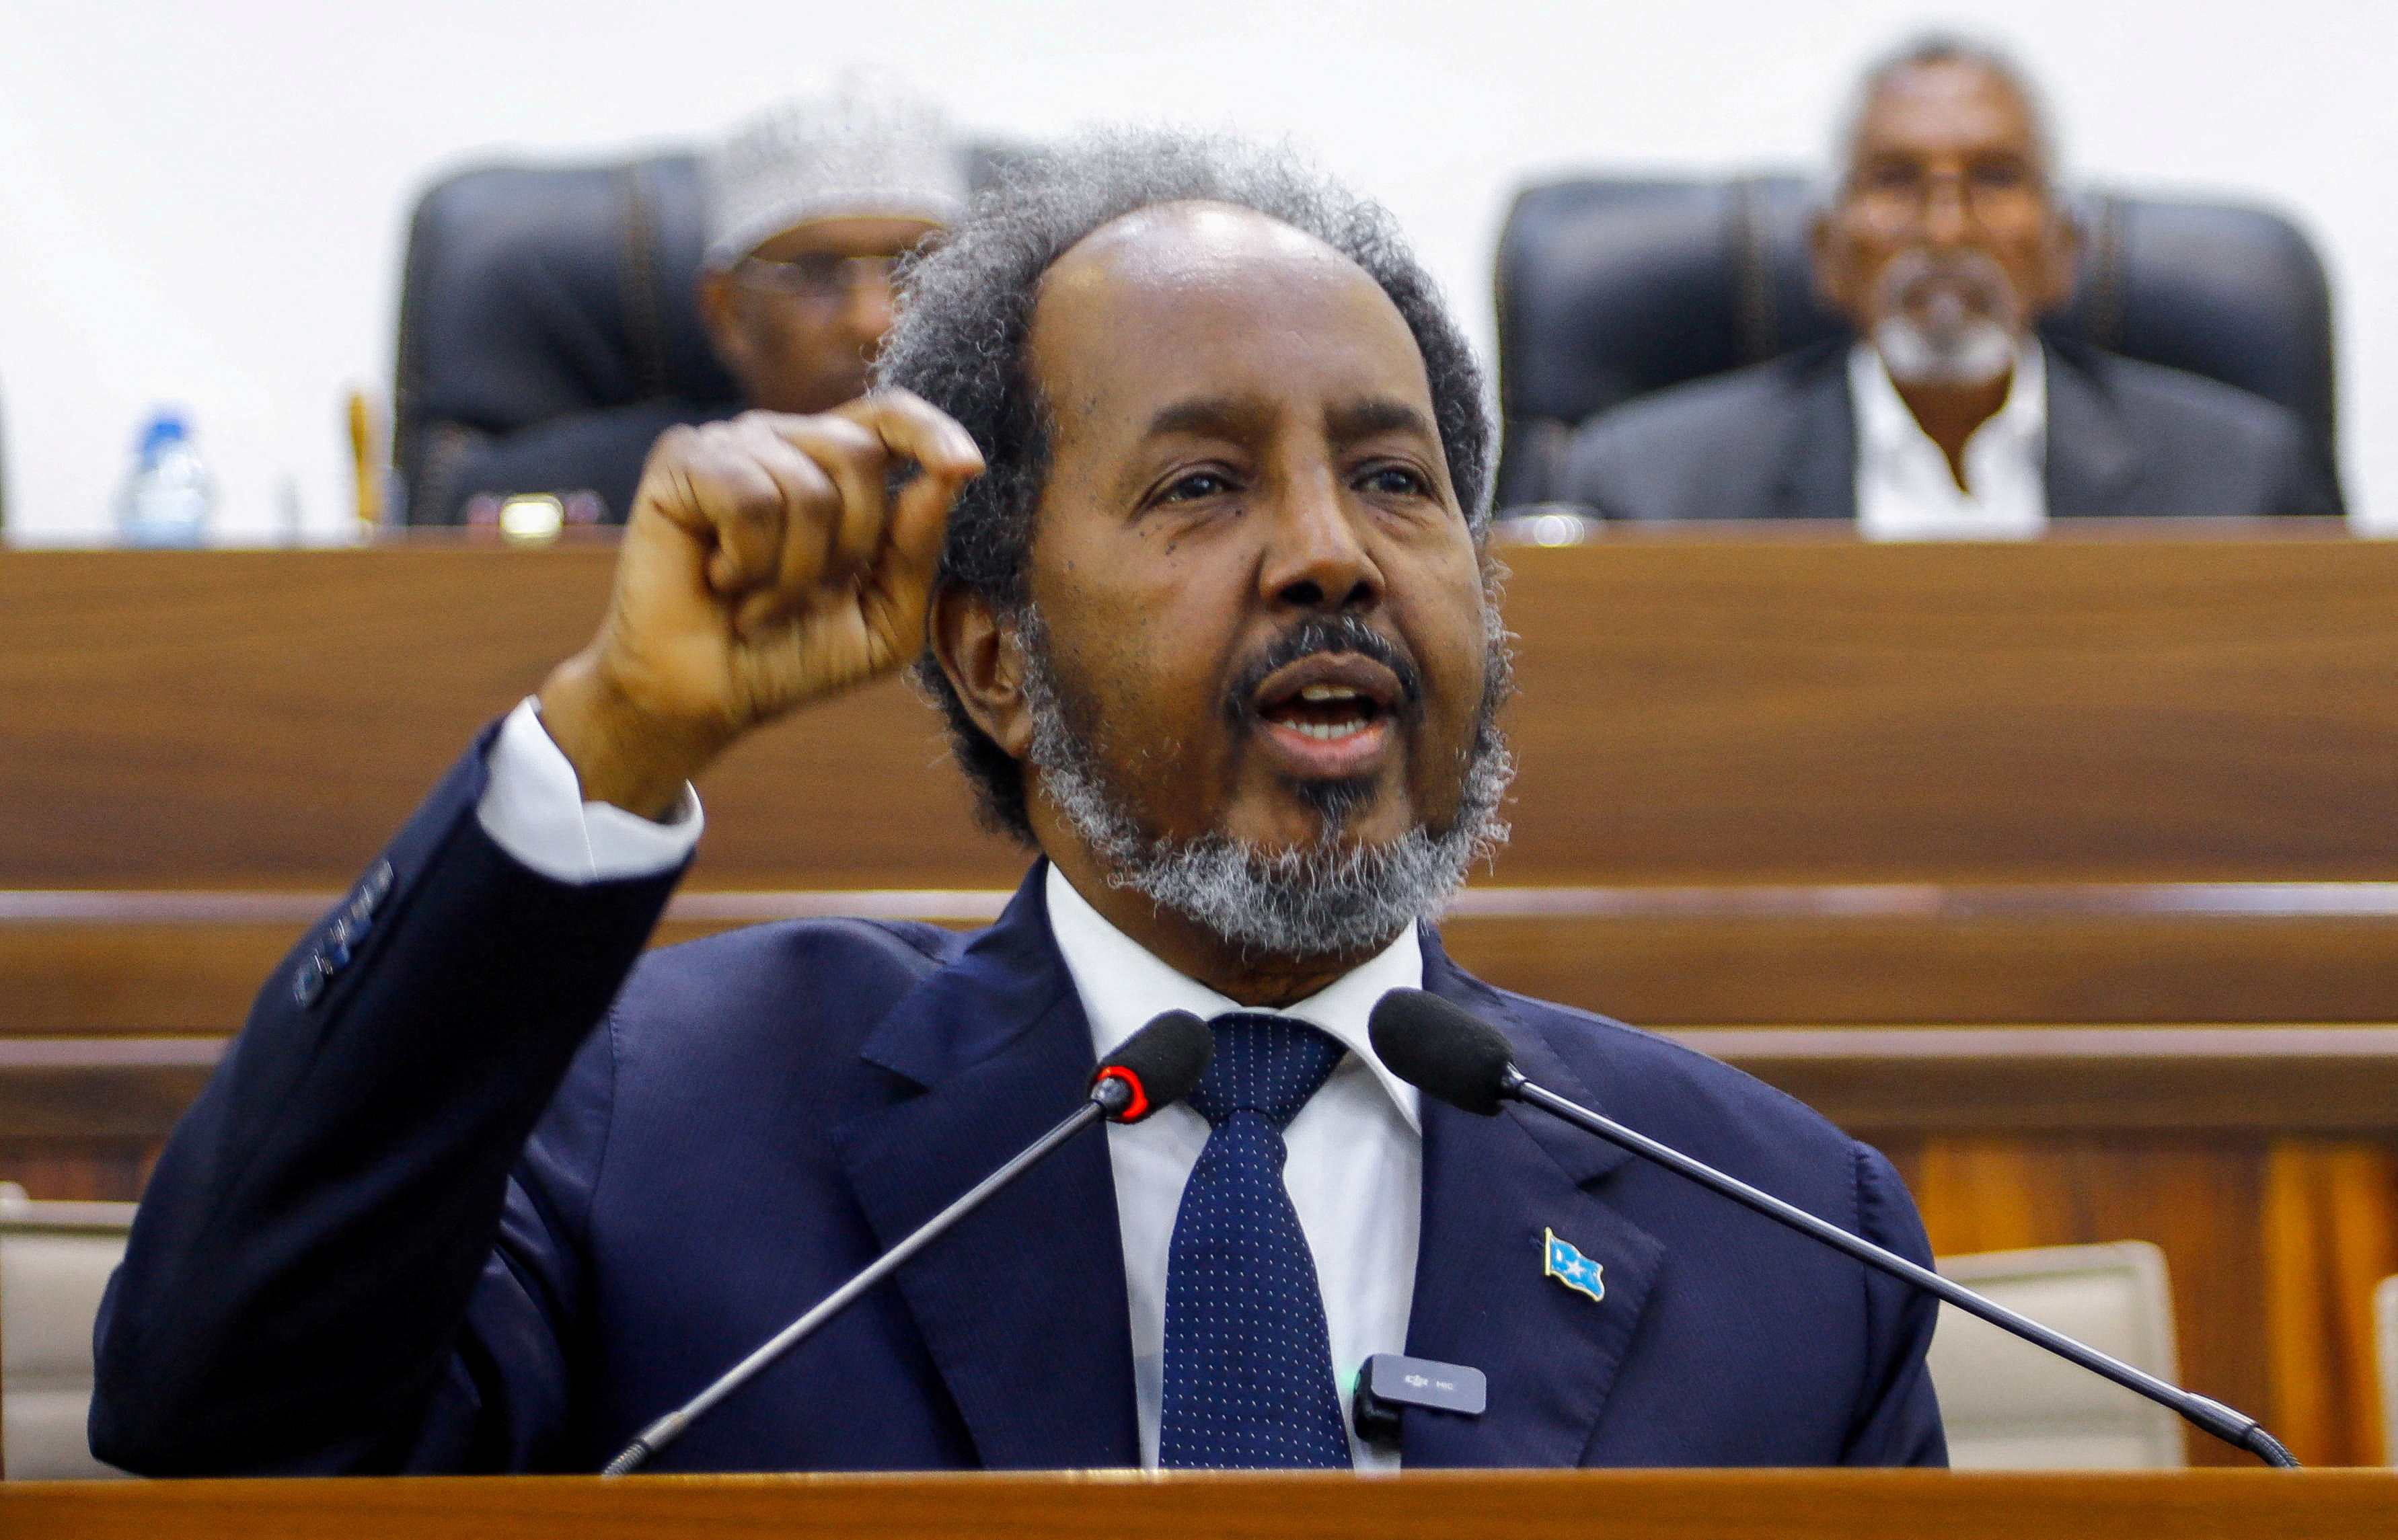 Somalia's President Hassan Sheikh Mohamud addresses the parliament regarding the Ethiopia-Somaliland port deal, in Mogadishu